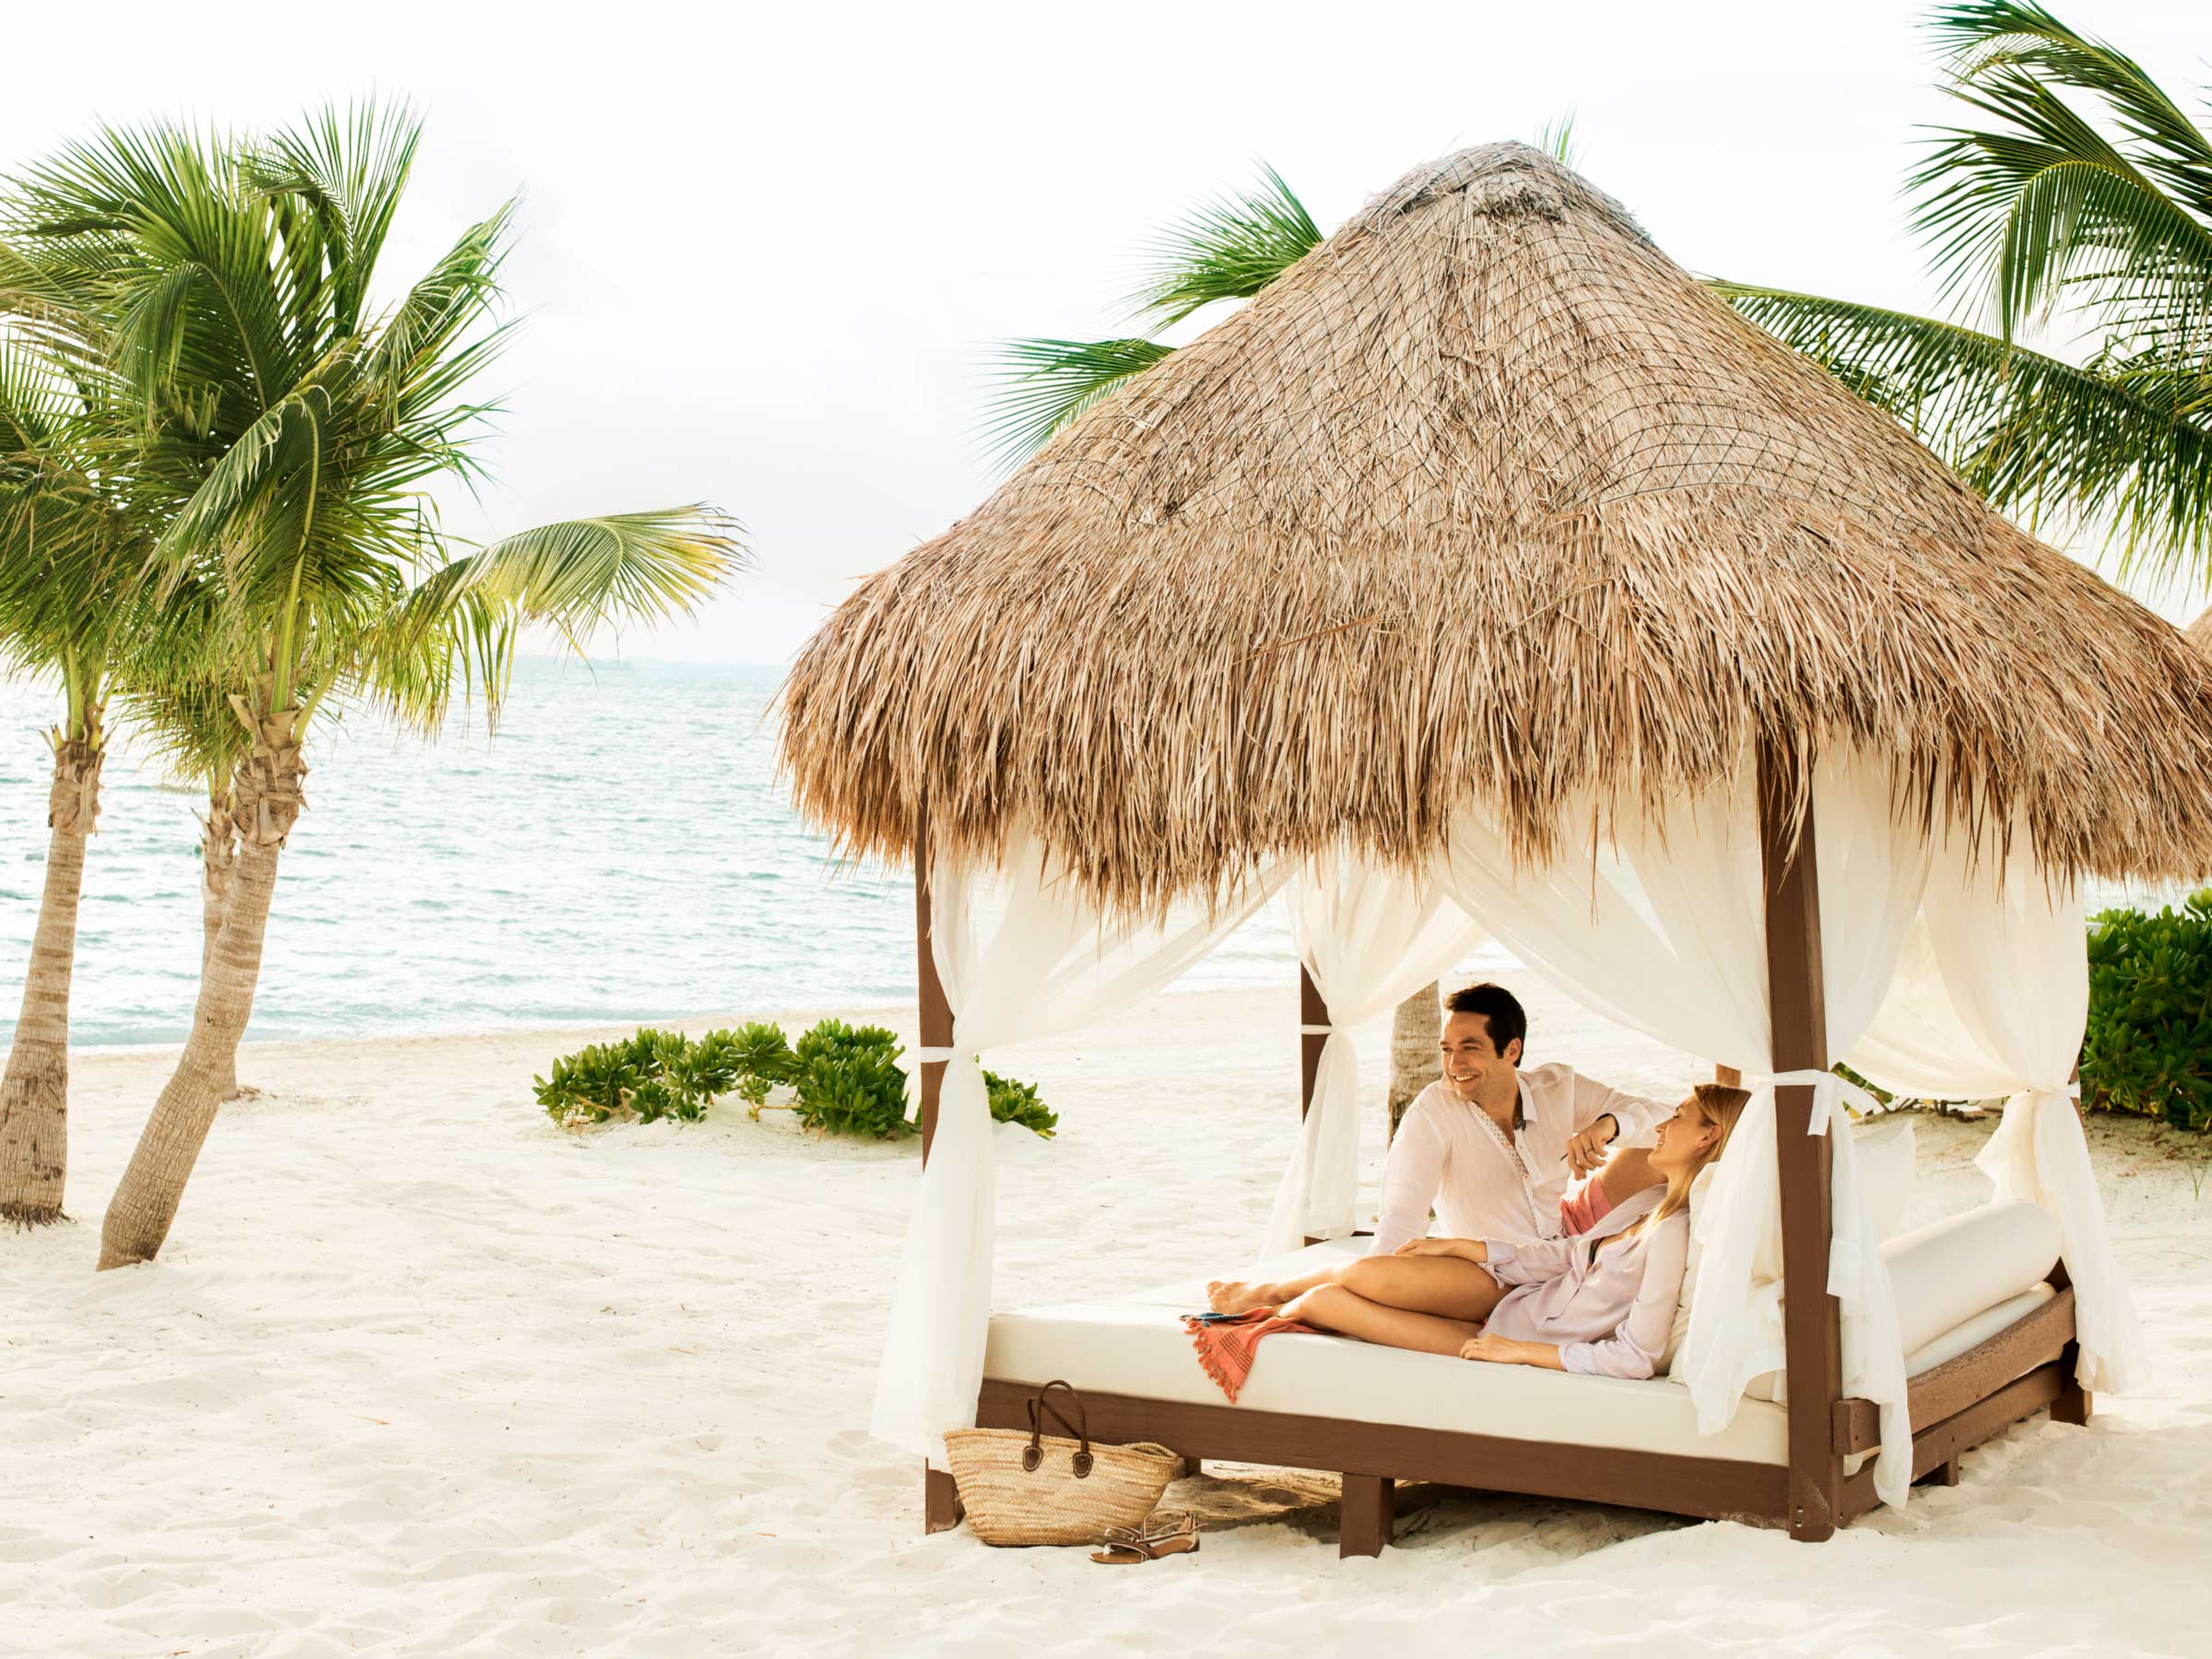 the ultimate beach destination for a Caribbean honeymoon